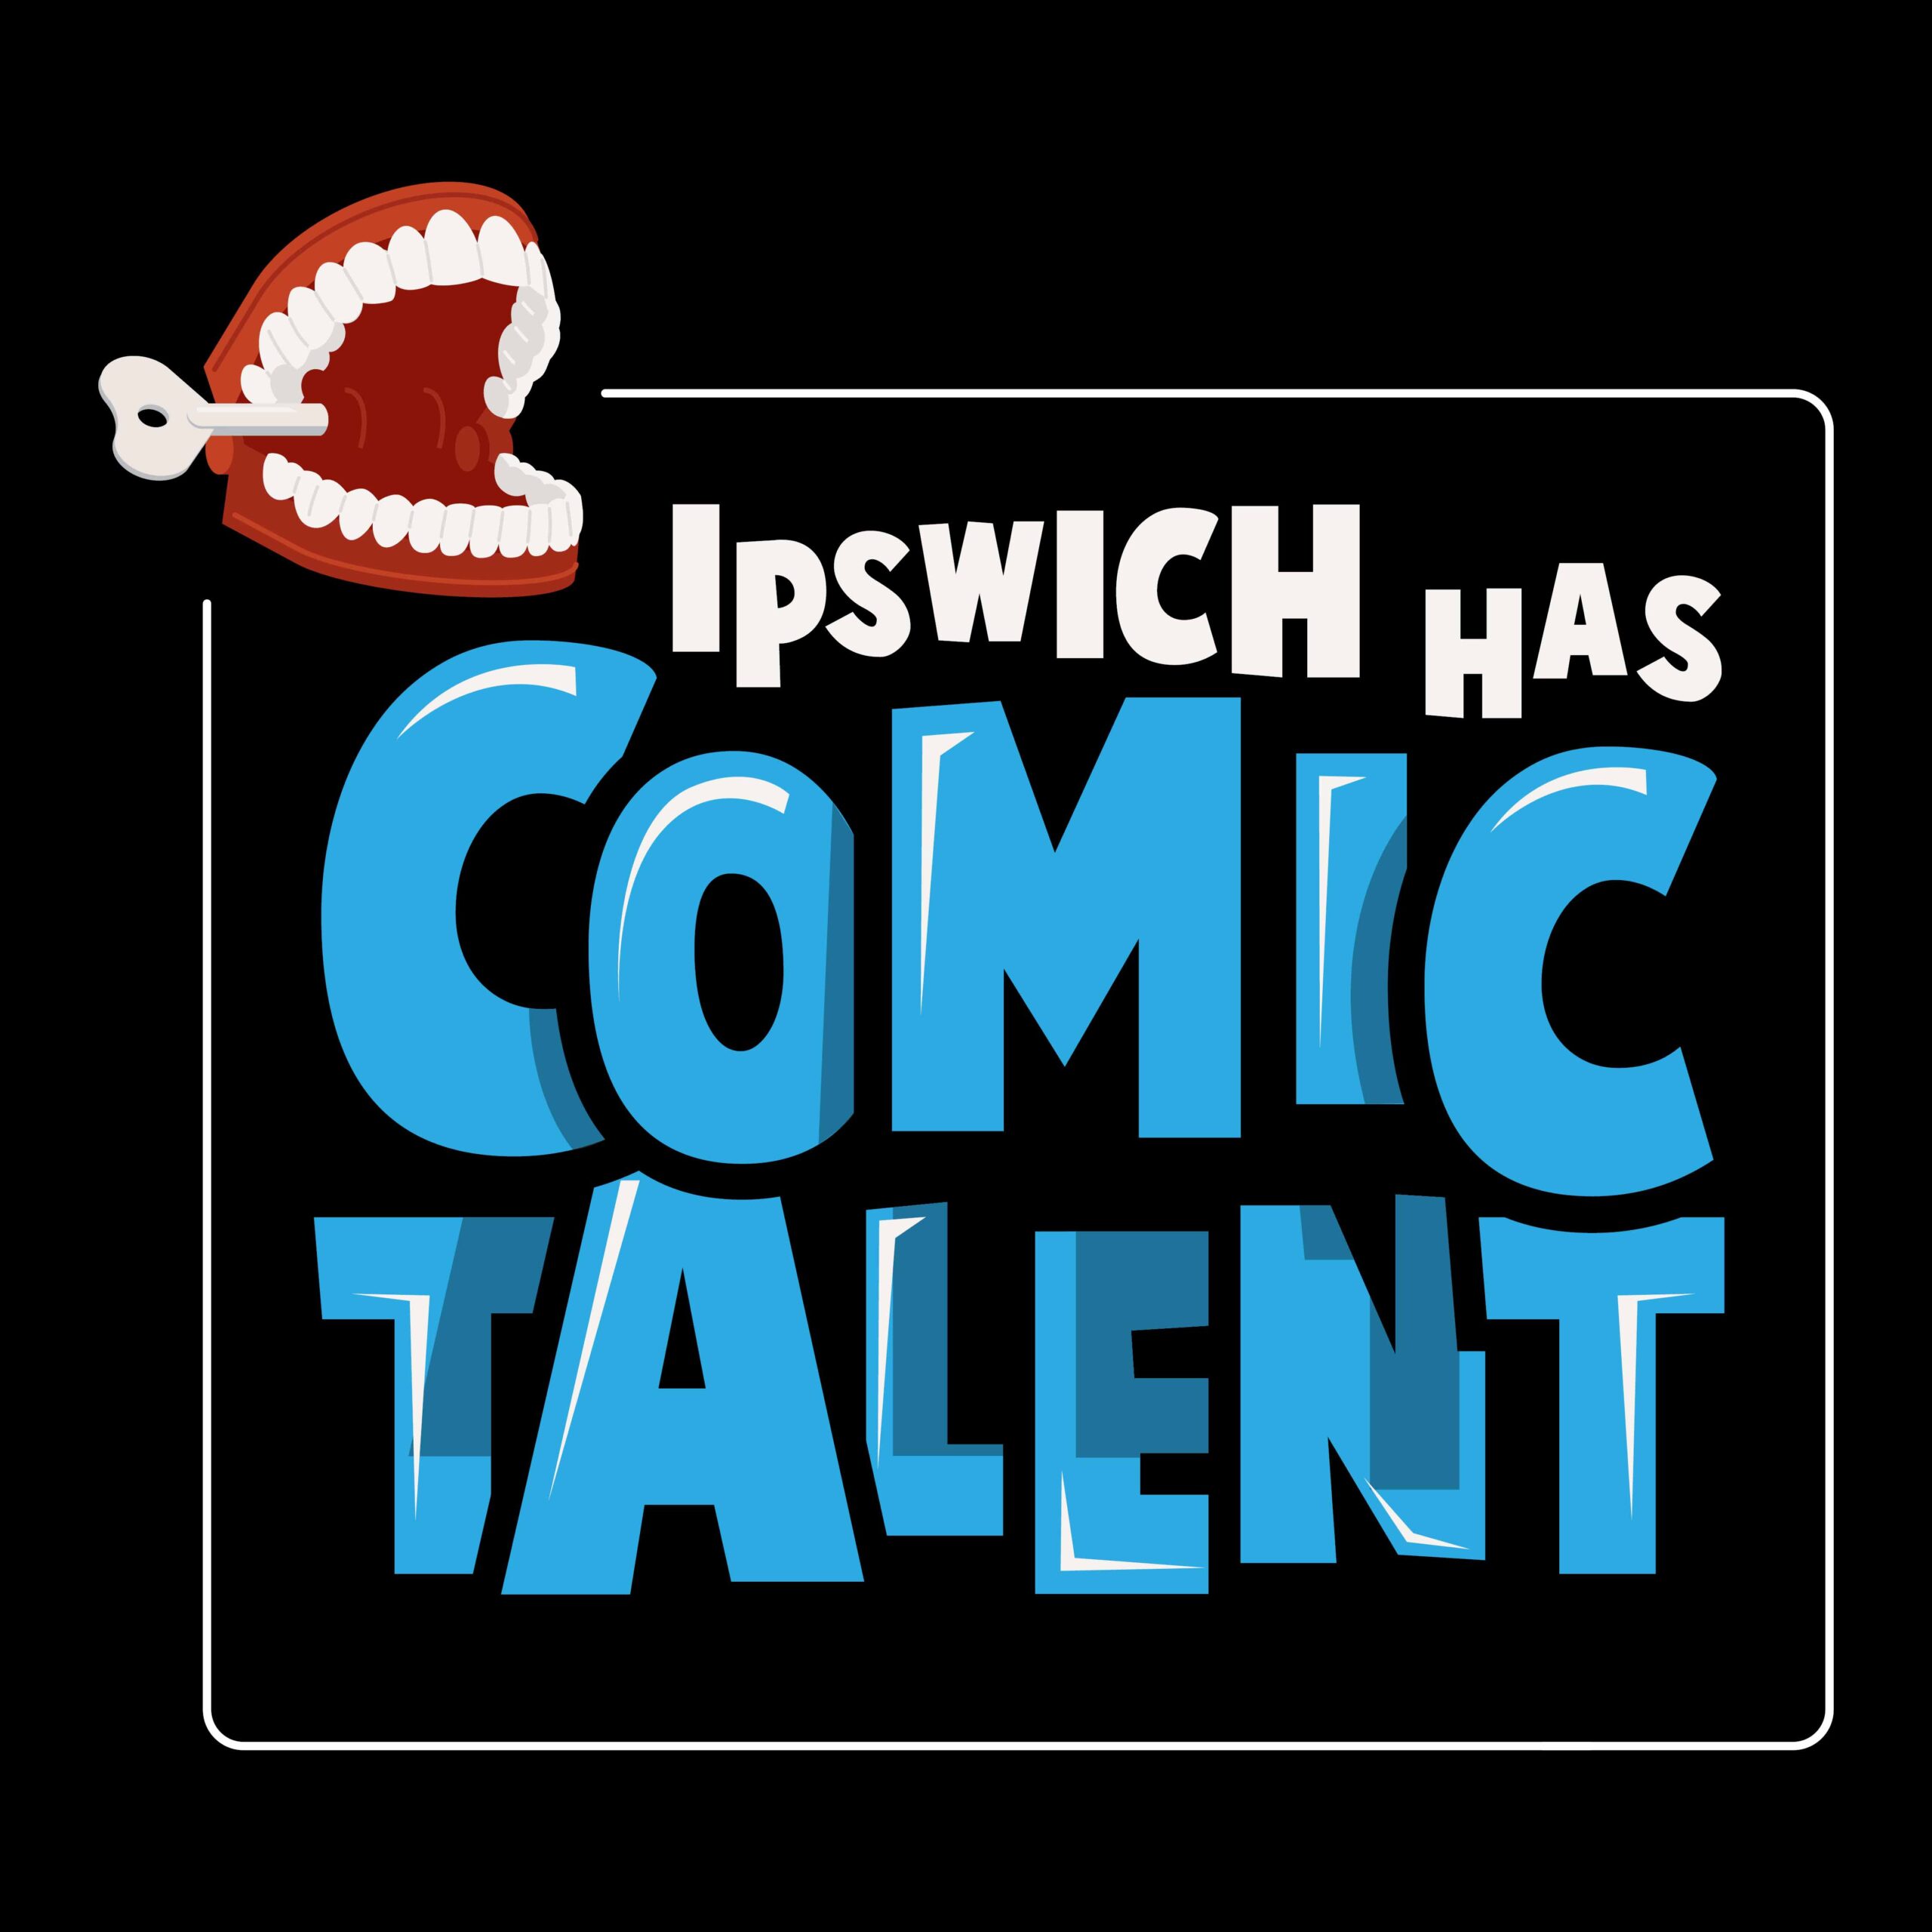 Ipswich has comic talent